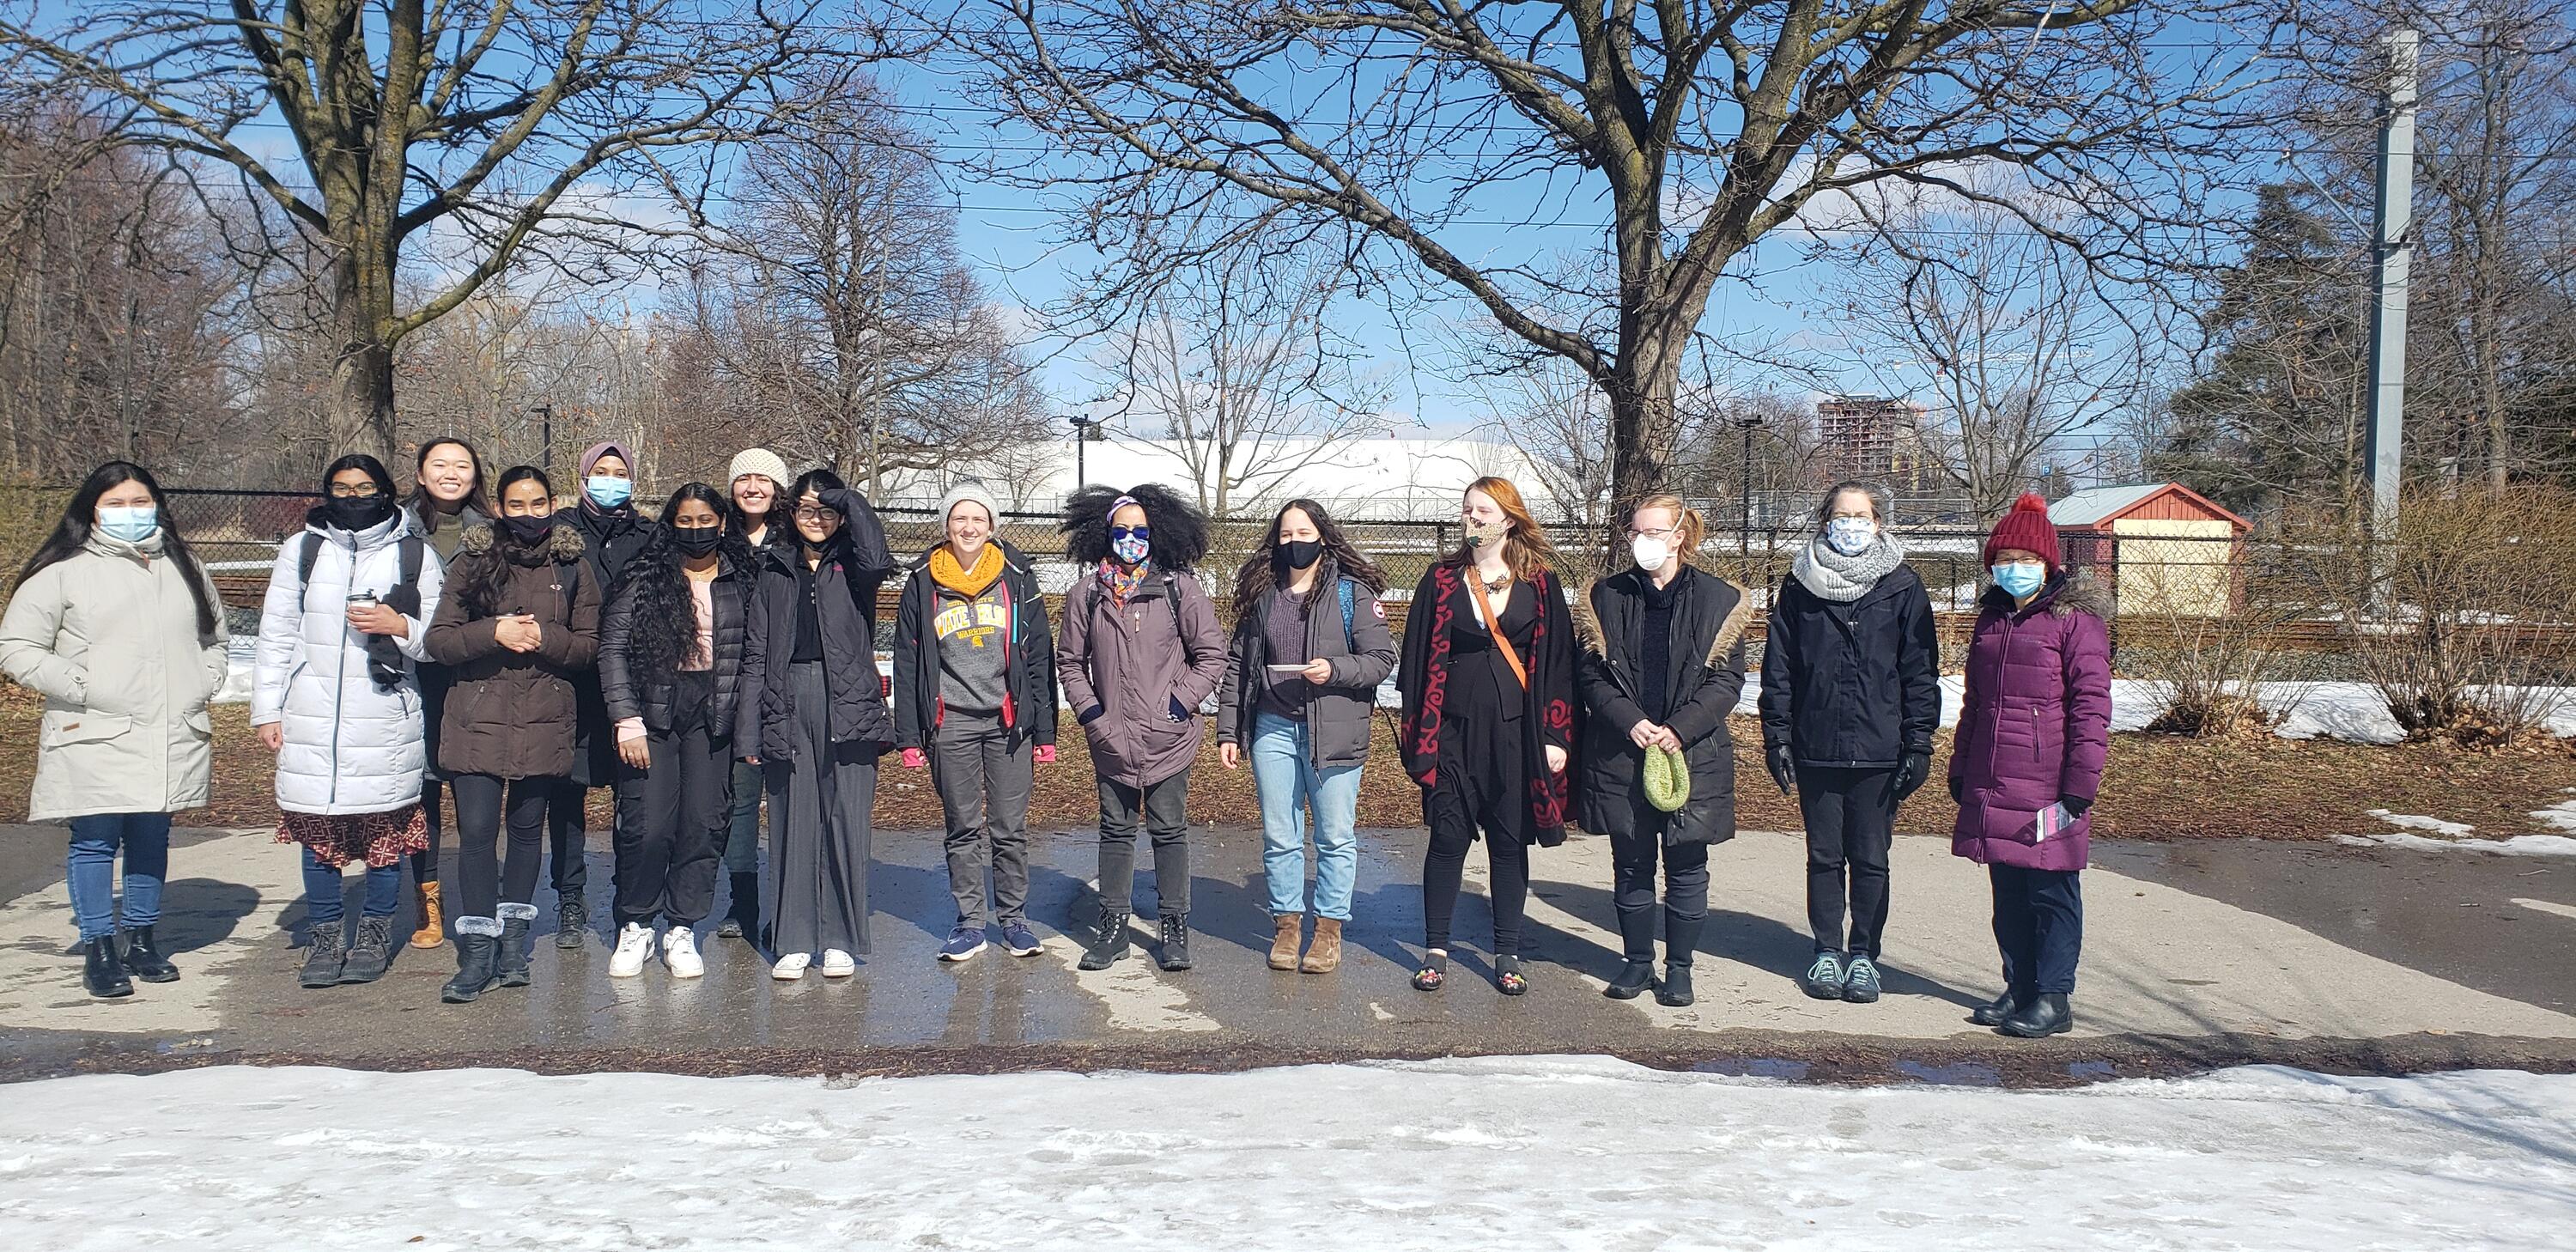 Group of women gathered for International Women's Day walk